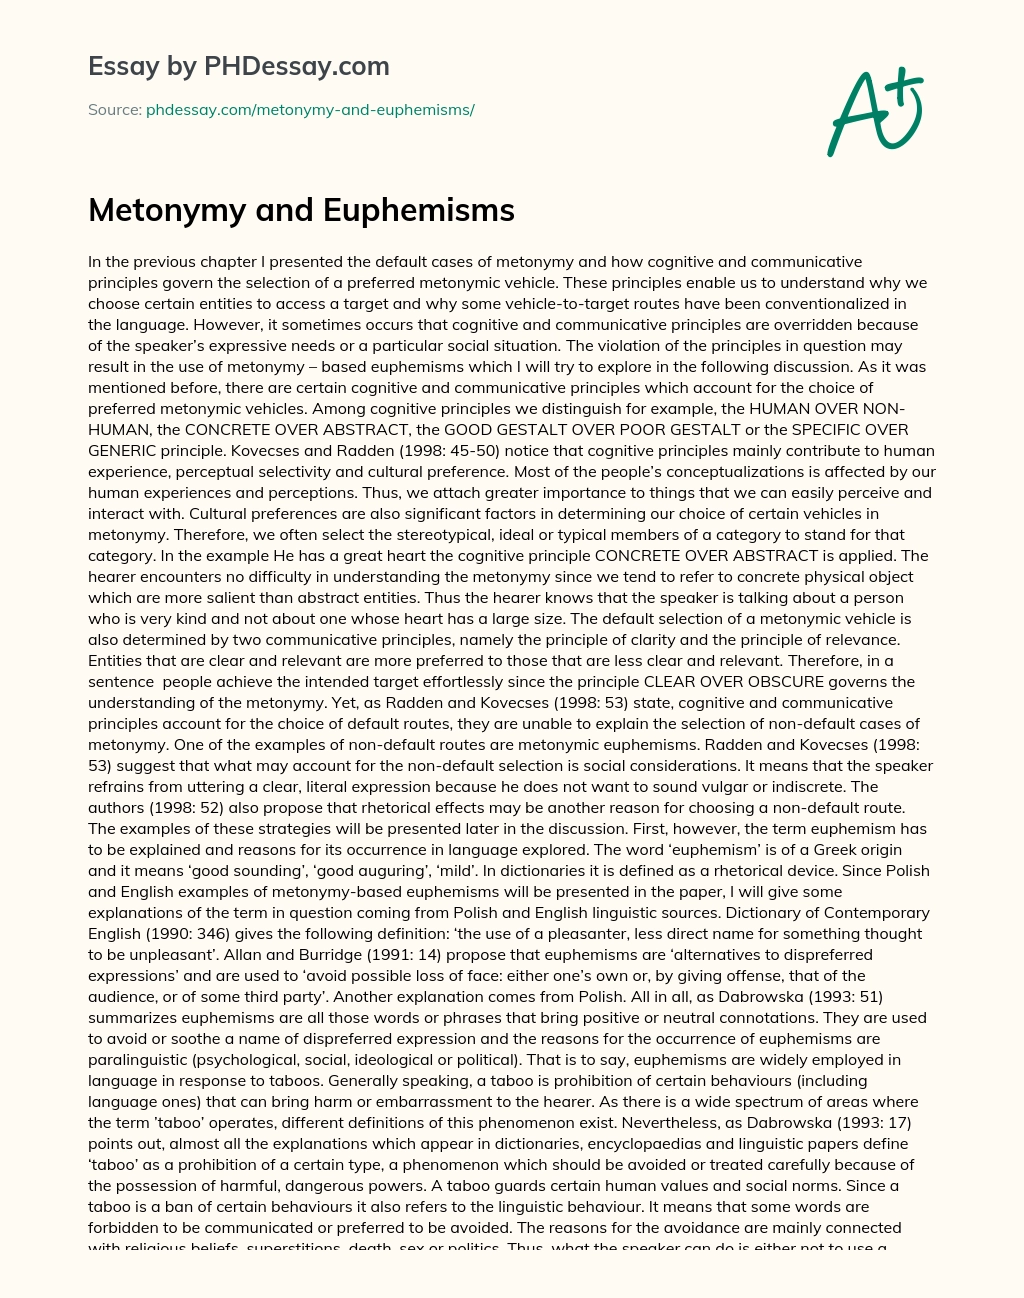 Metonymy and Euphemisms essay